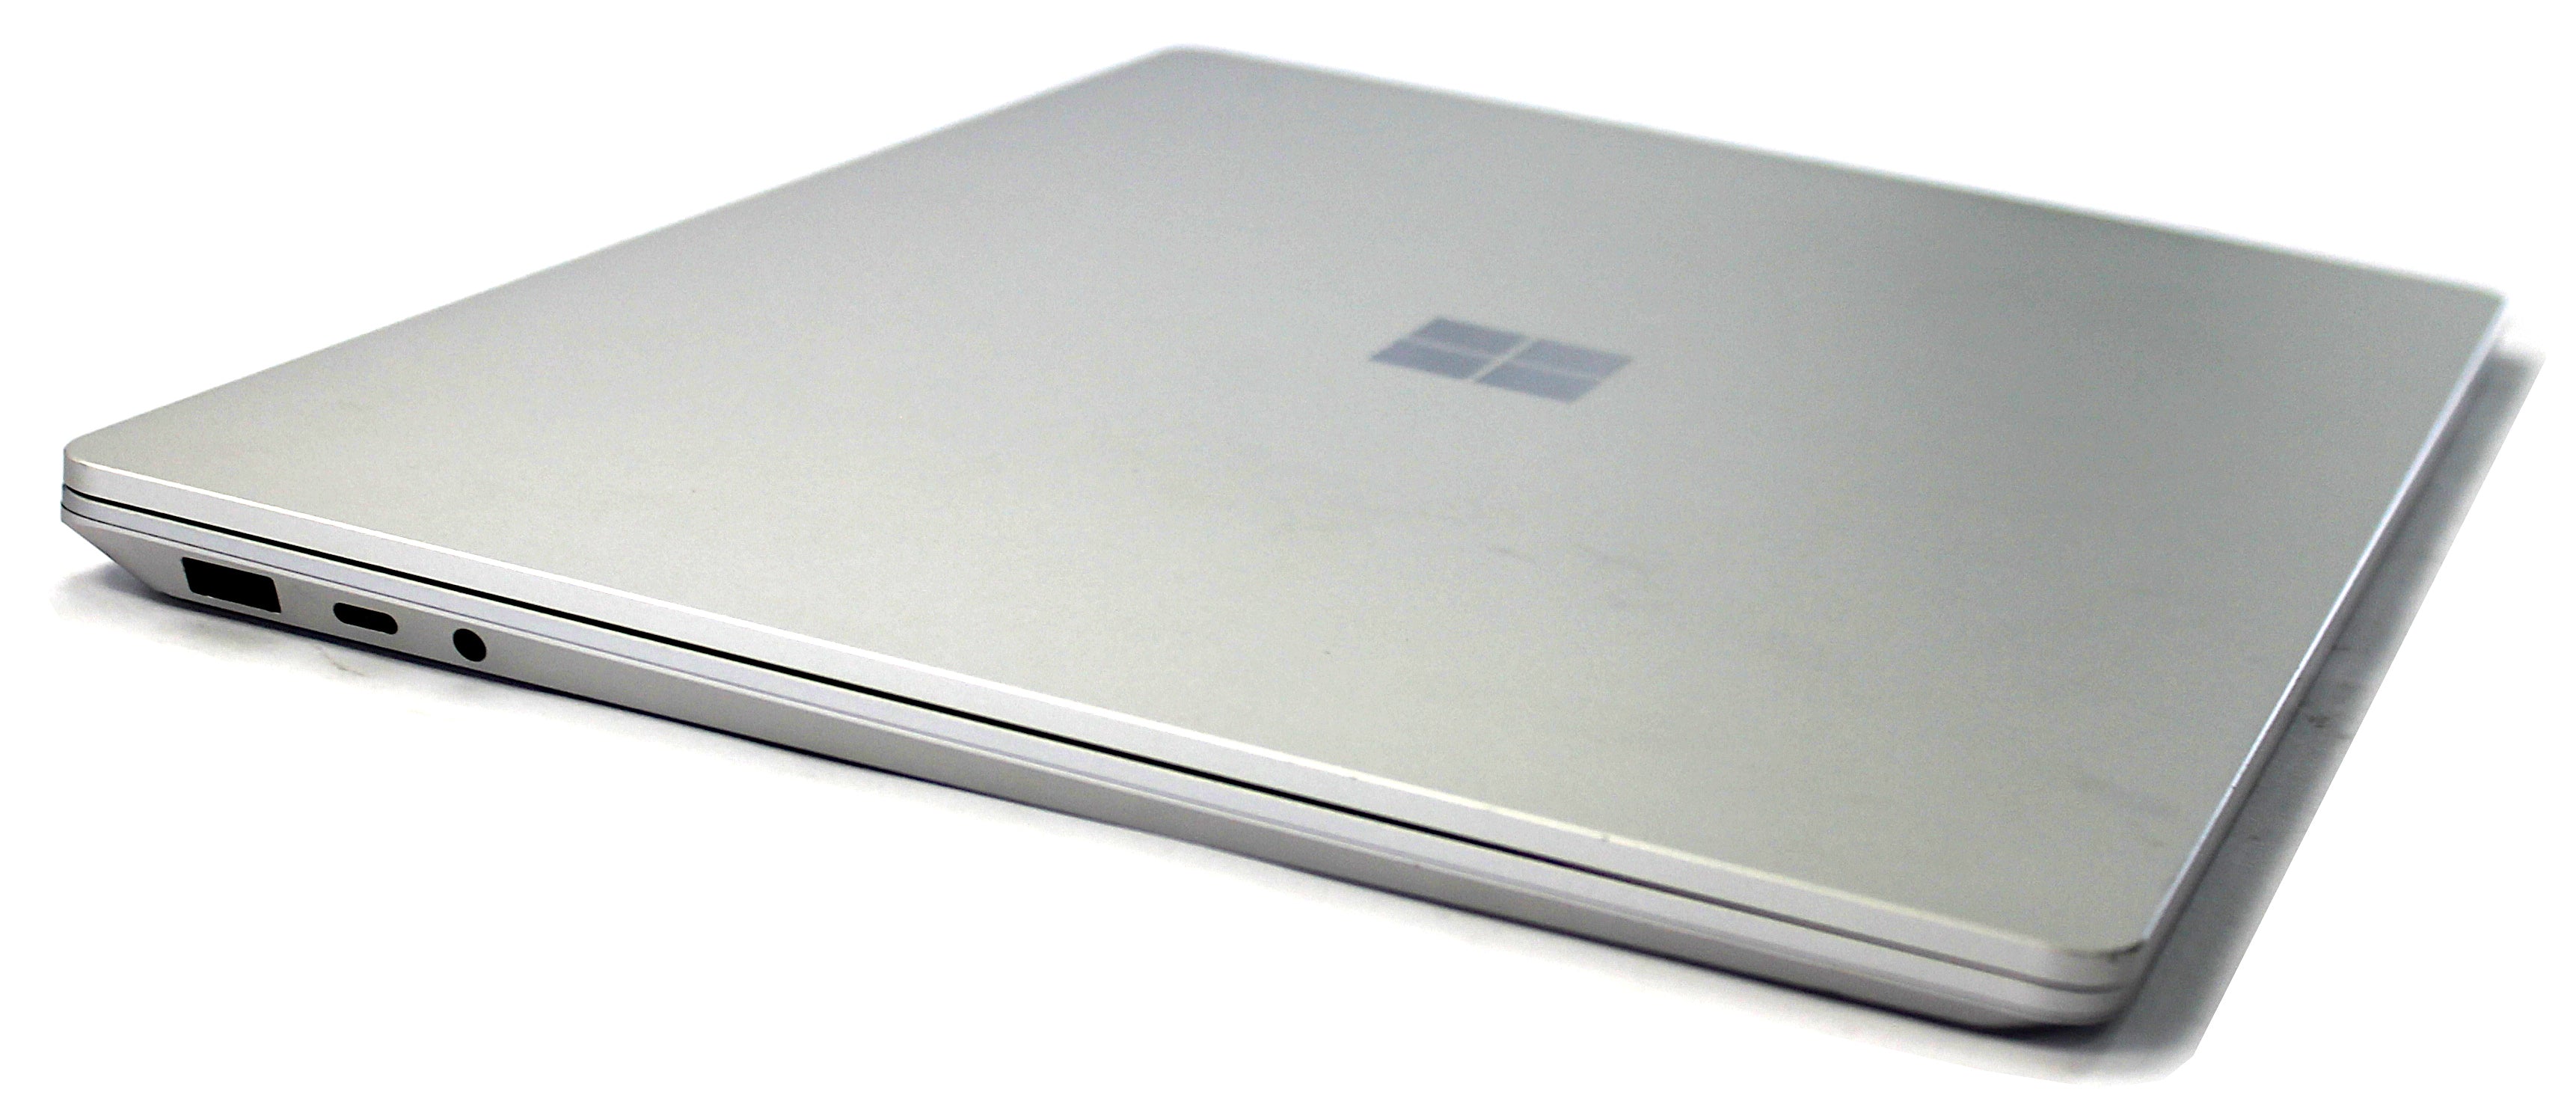 Microsoft Surface Laptop 3, 15" AMD Ryzen 5, 8GB RAM, 256GB SSD